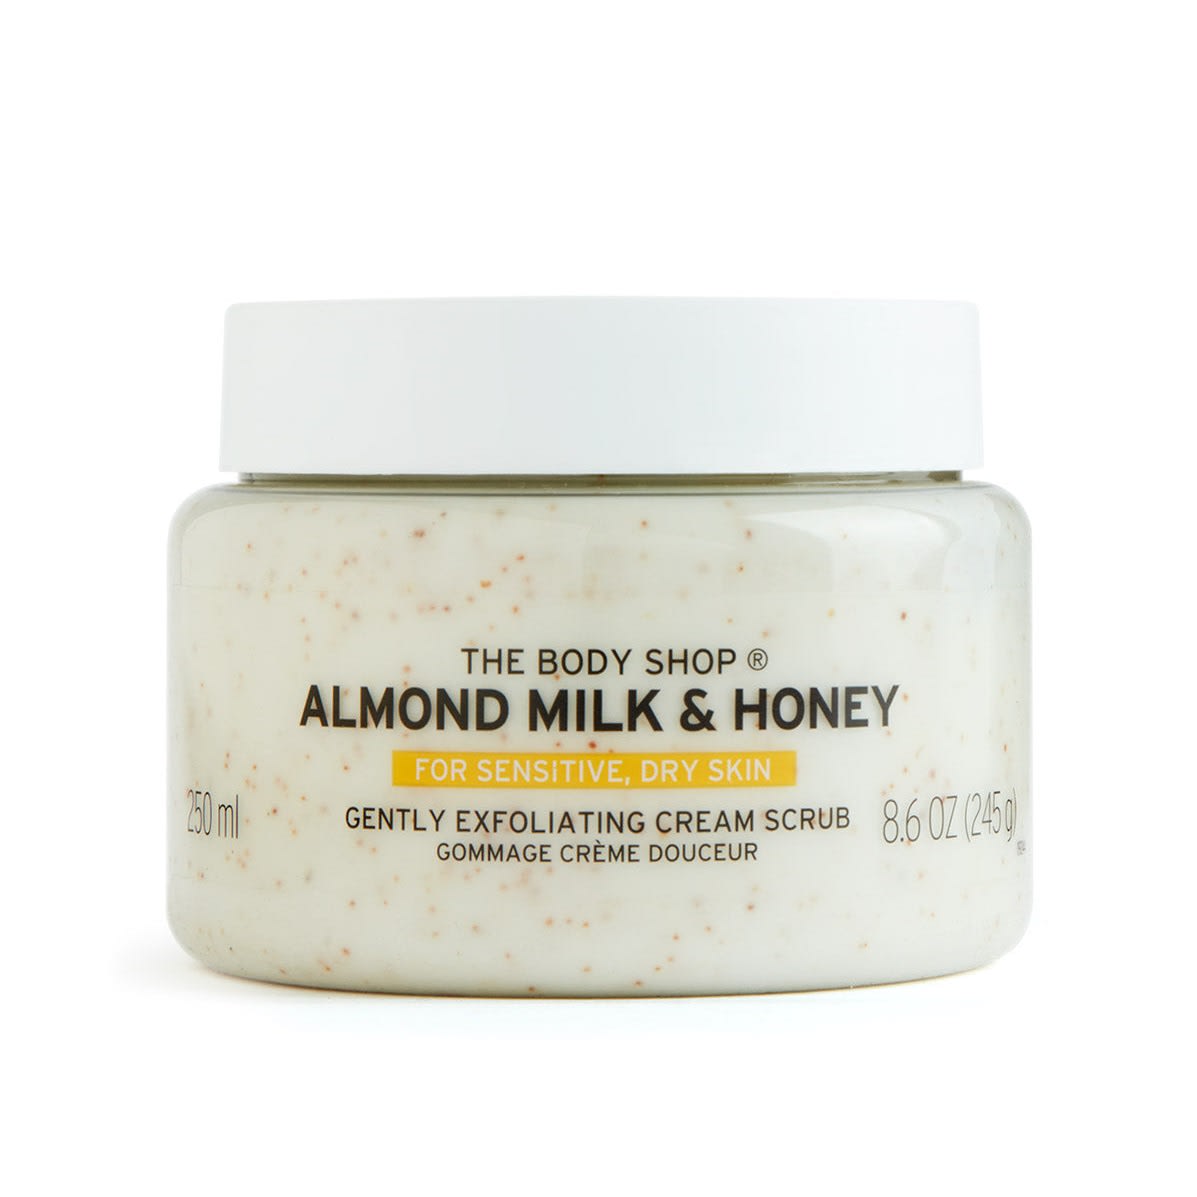 The Body Shop Almond Milk and Honey Gently Exfoliating Cream Scrub_1